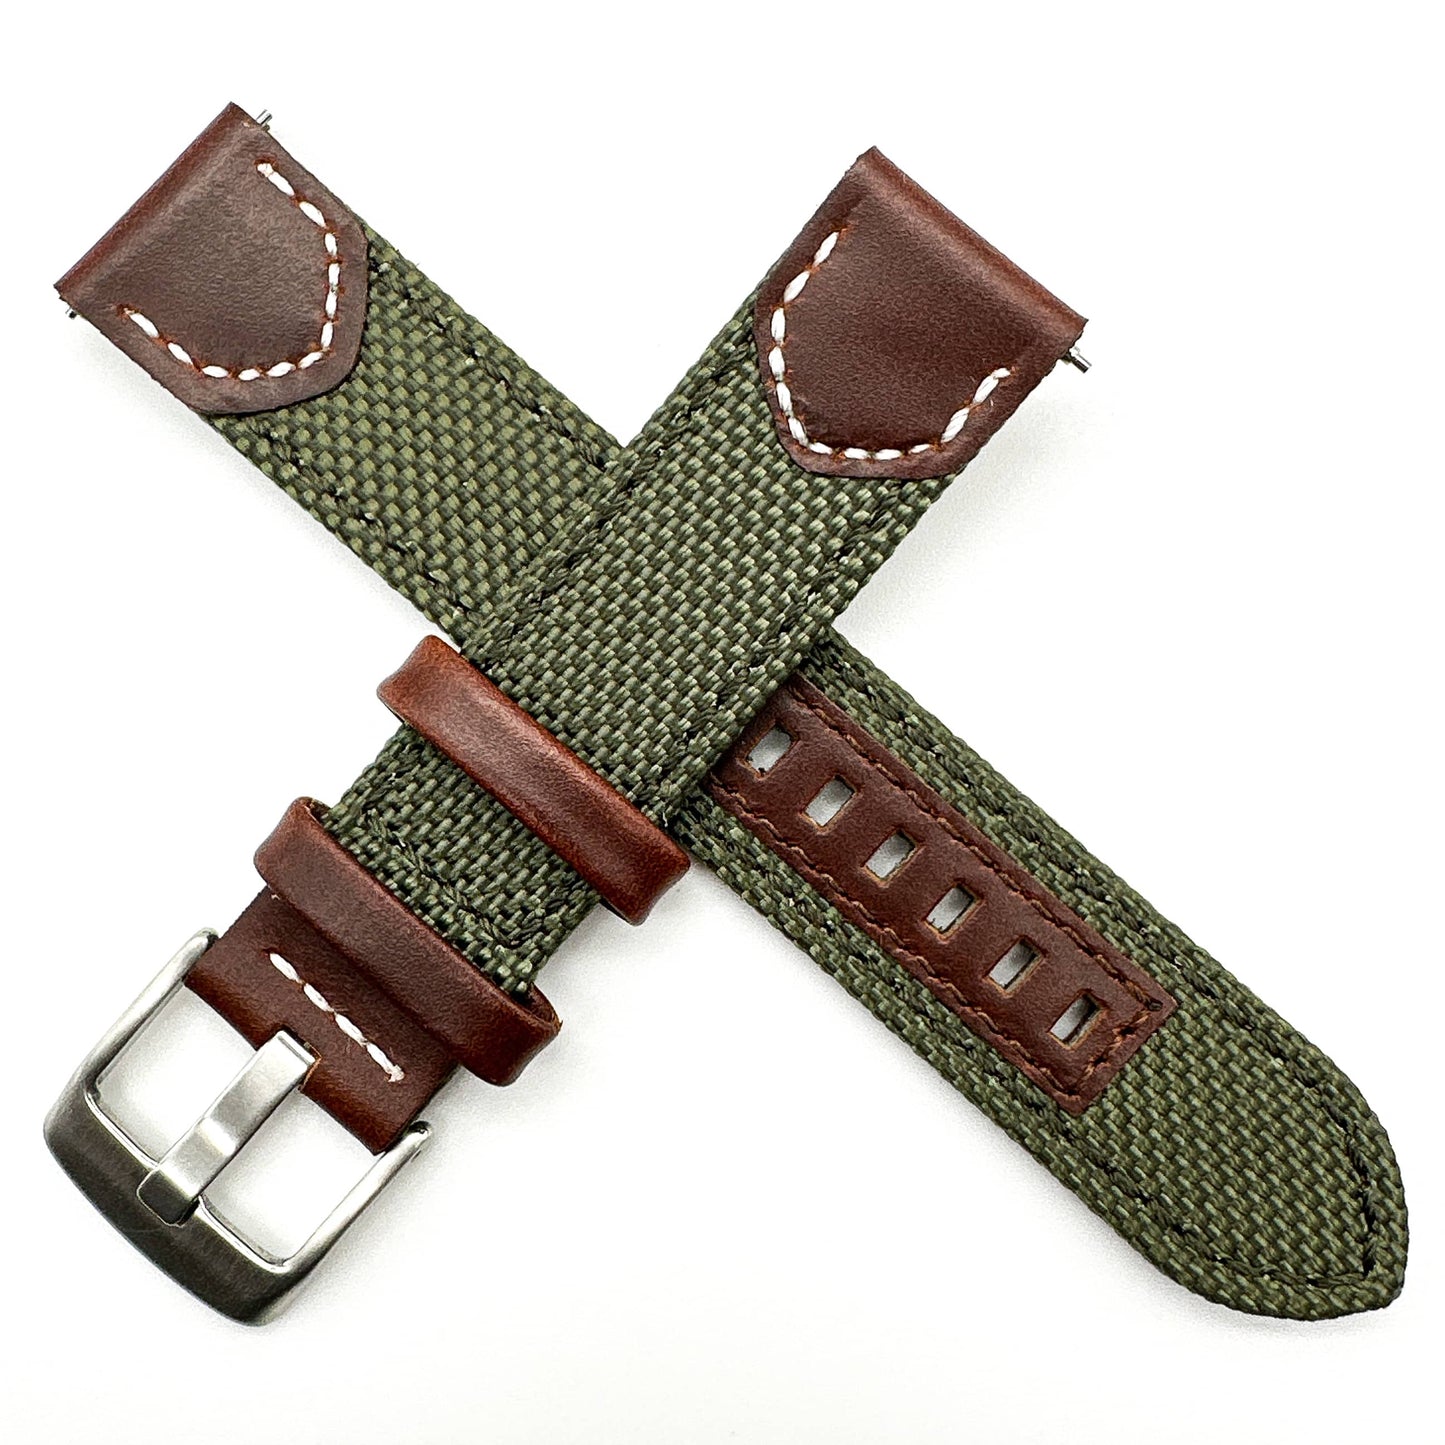 Sailcloth Nylon Leather Hybrid Watch Strap Green 3